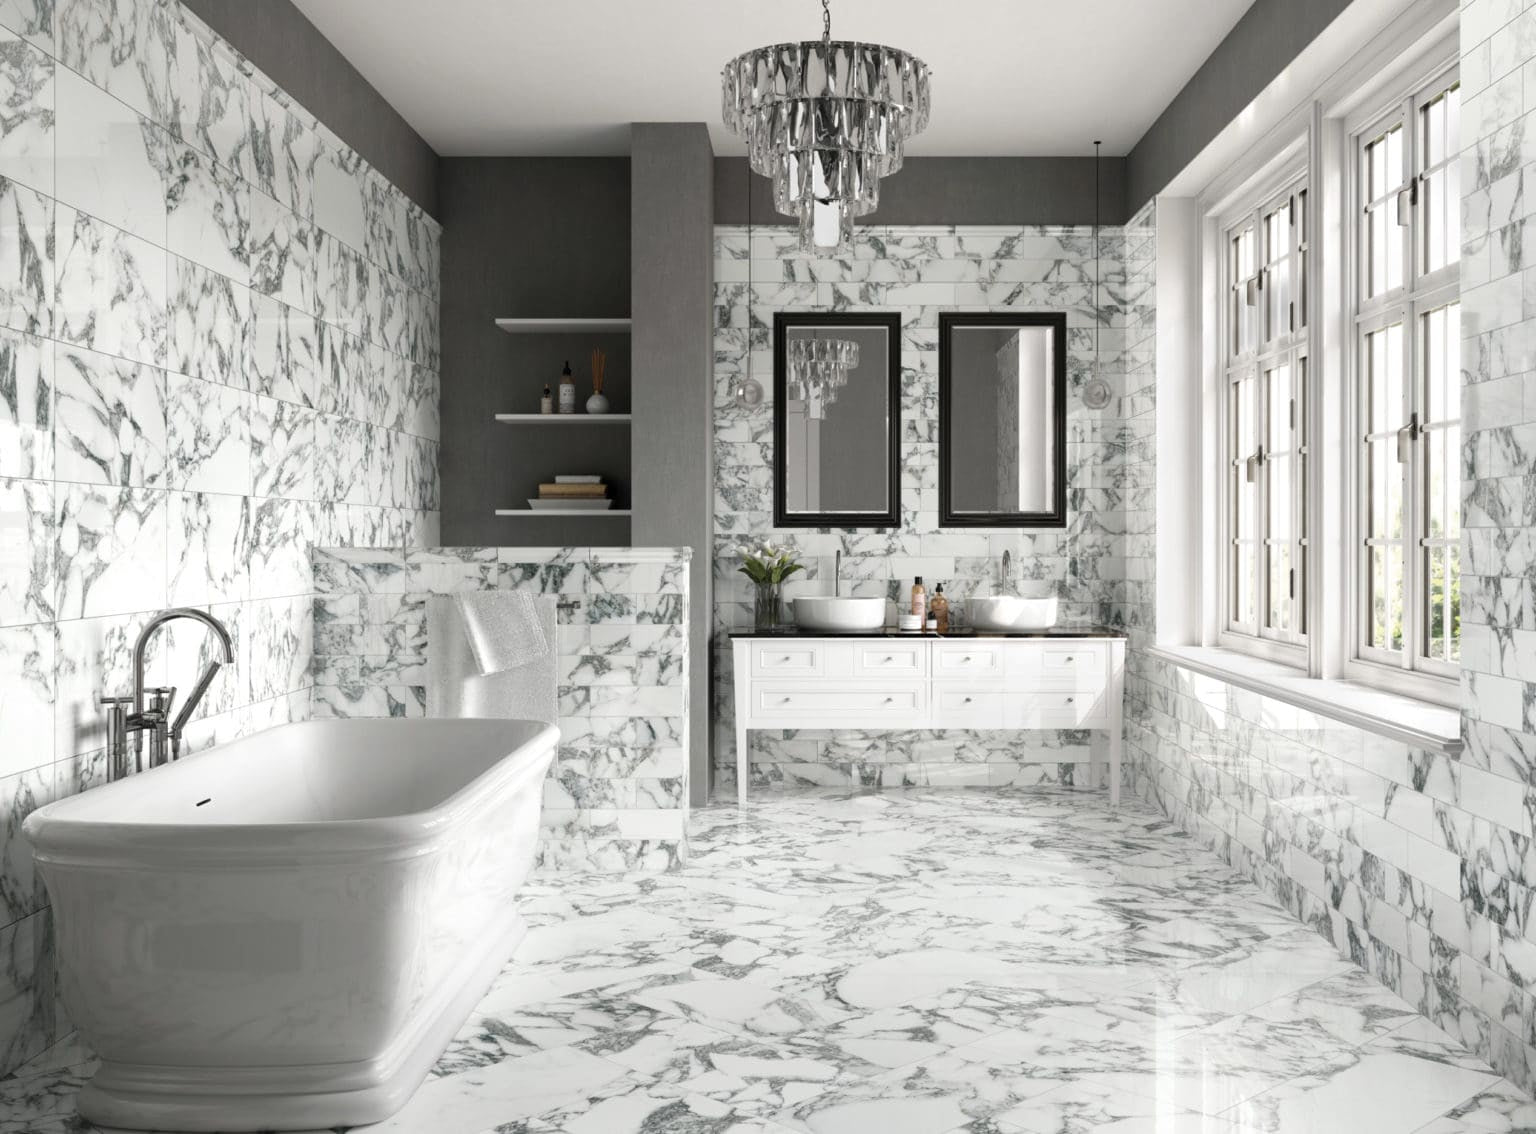 New Arabescato Monte Carlo 4×12 Porcelain Tile on Bathroom Floors and Walls